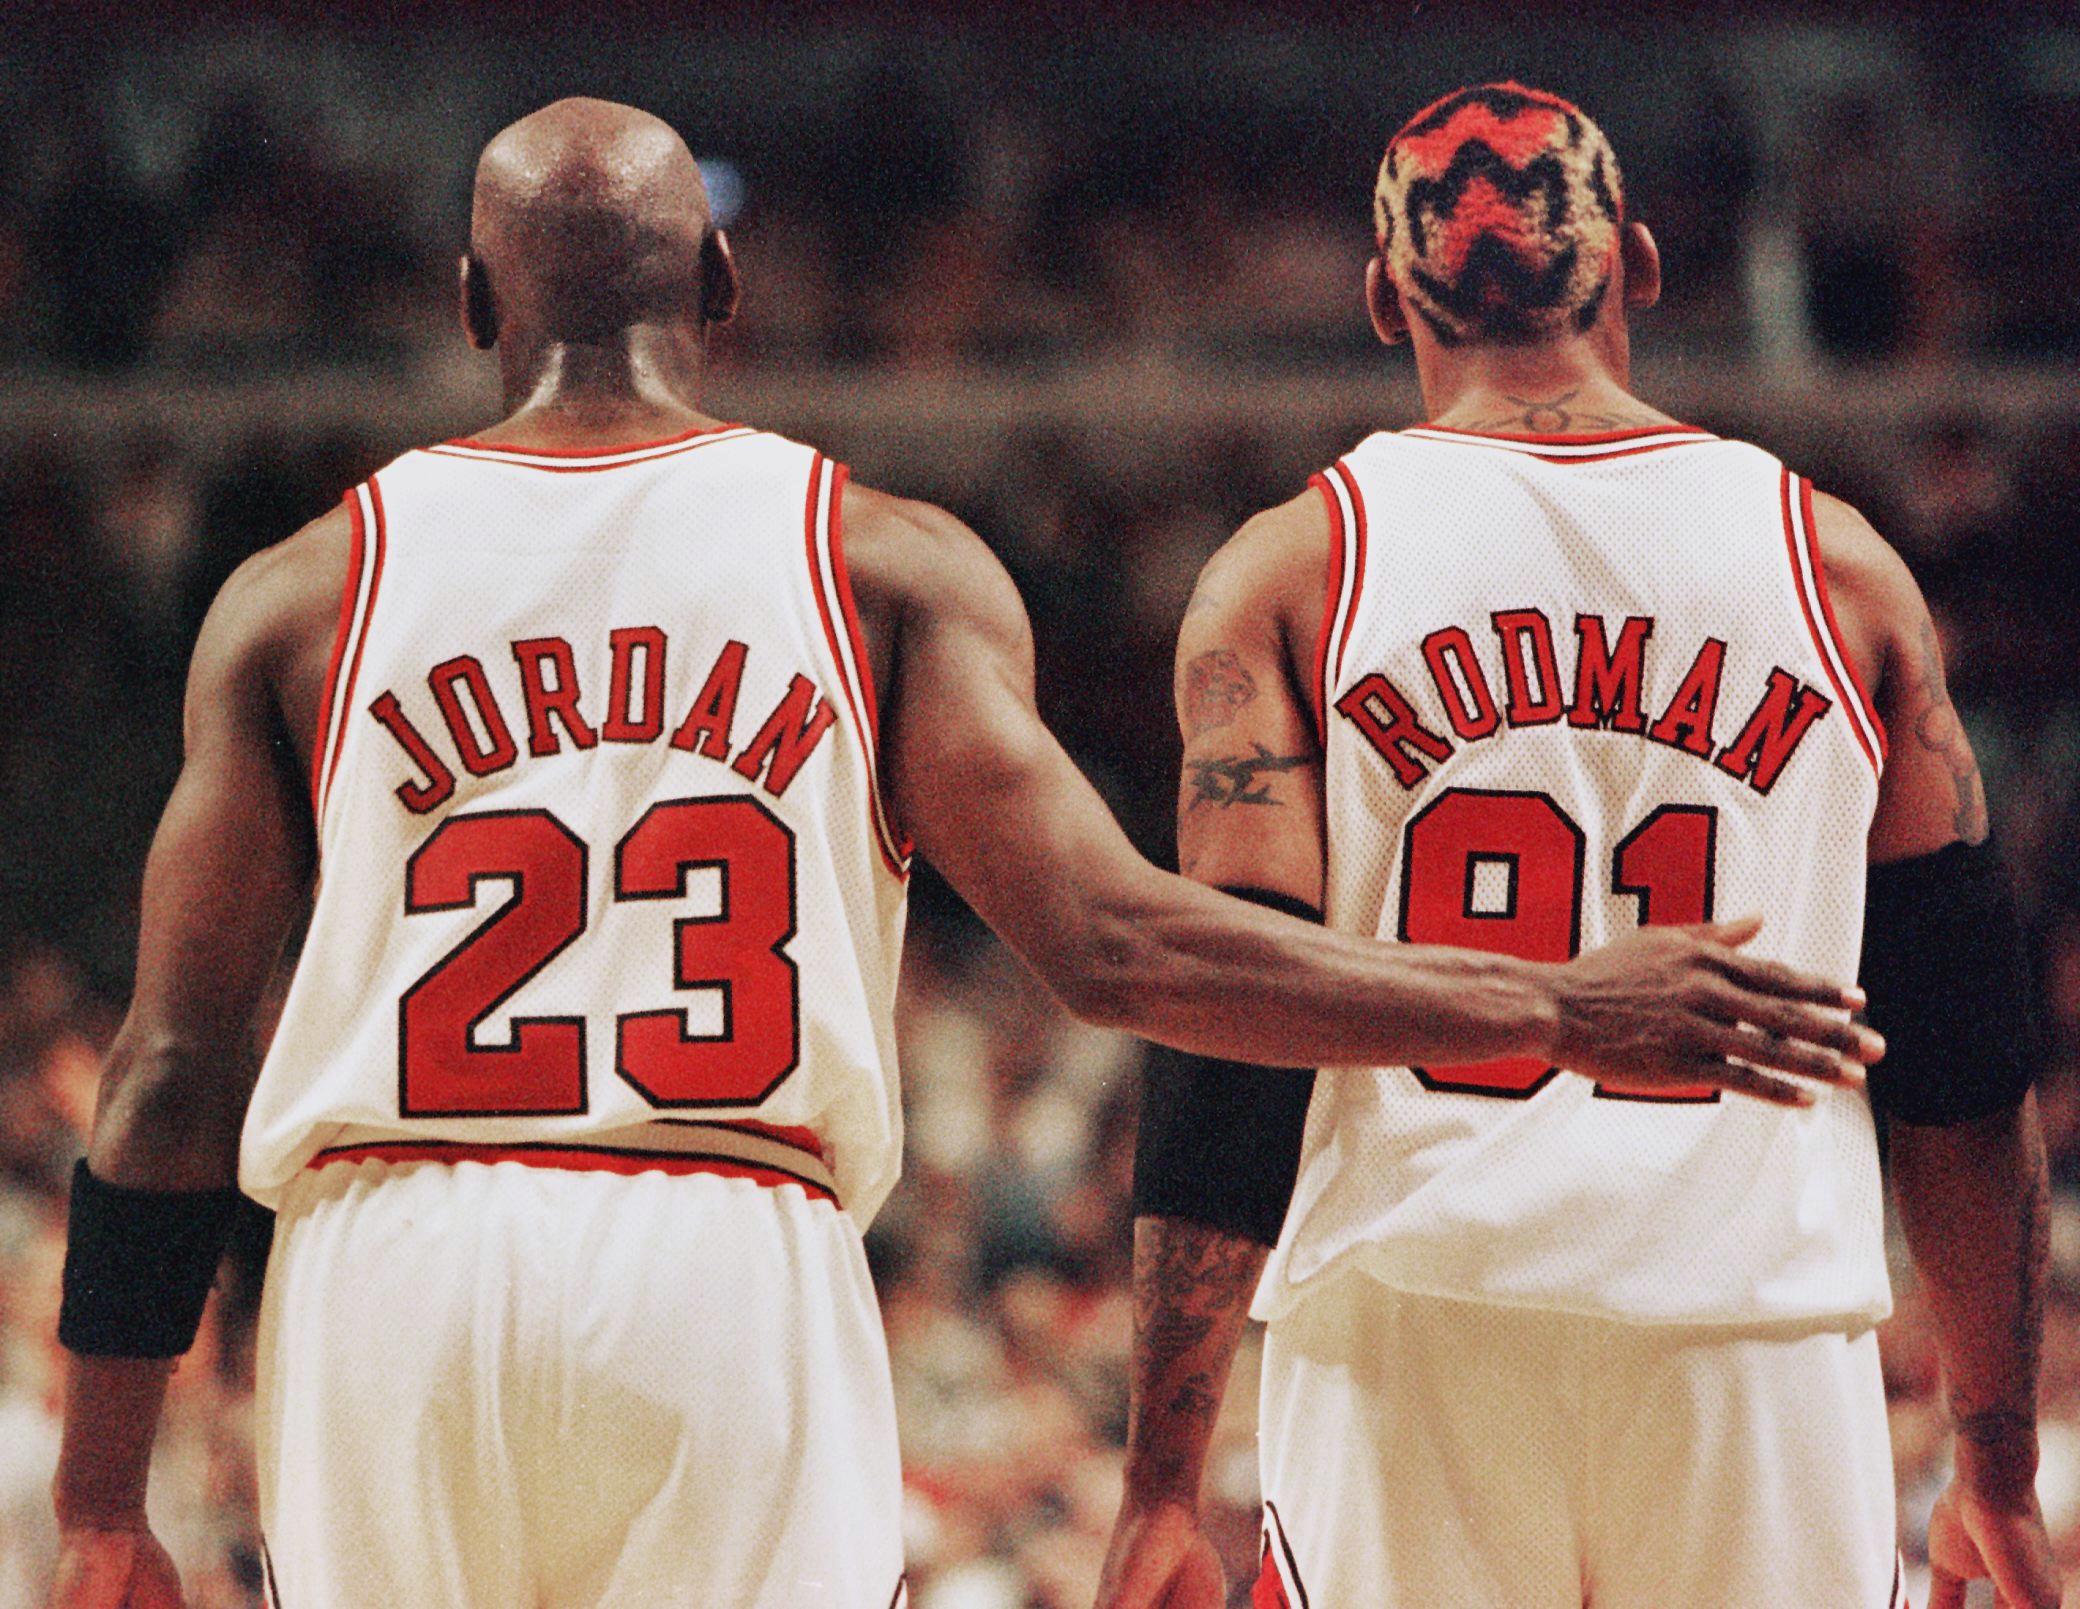 Michael Jordan putting his arm around Dennis Rodman